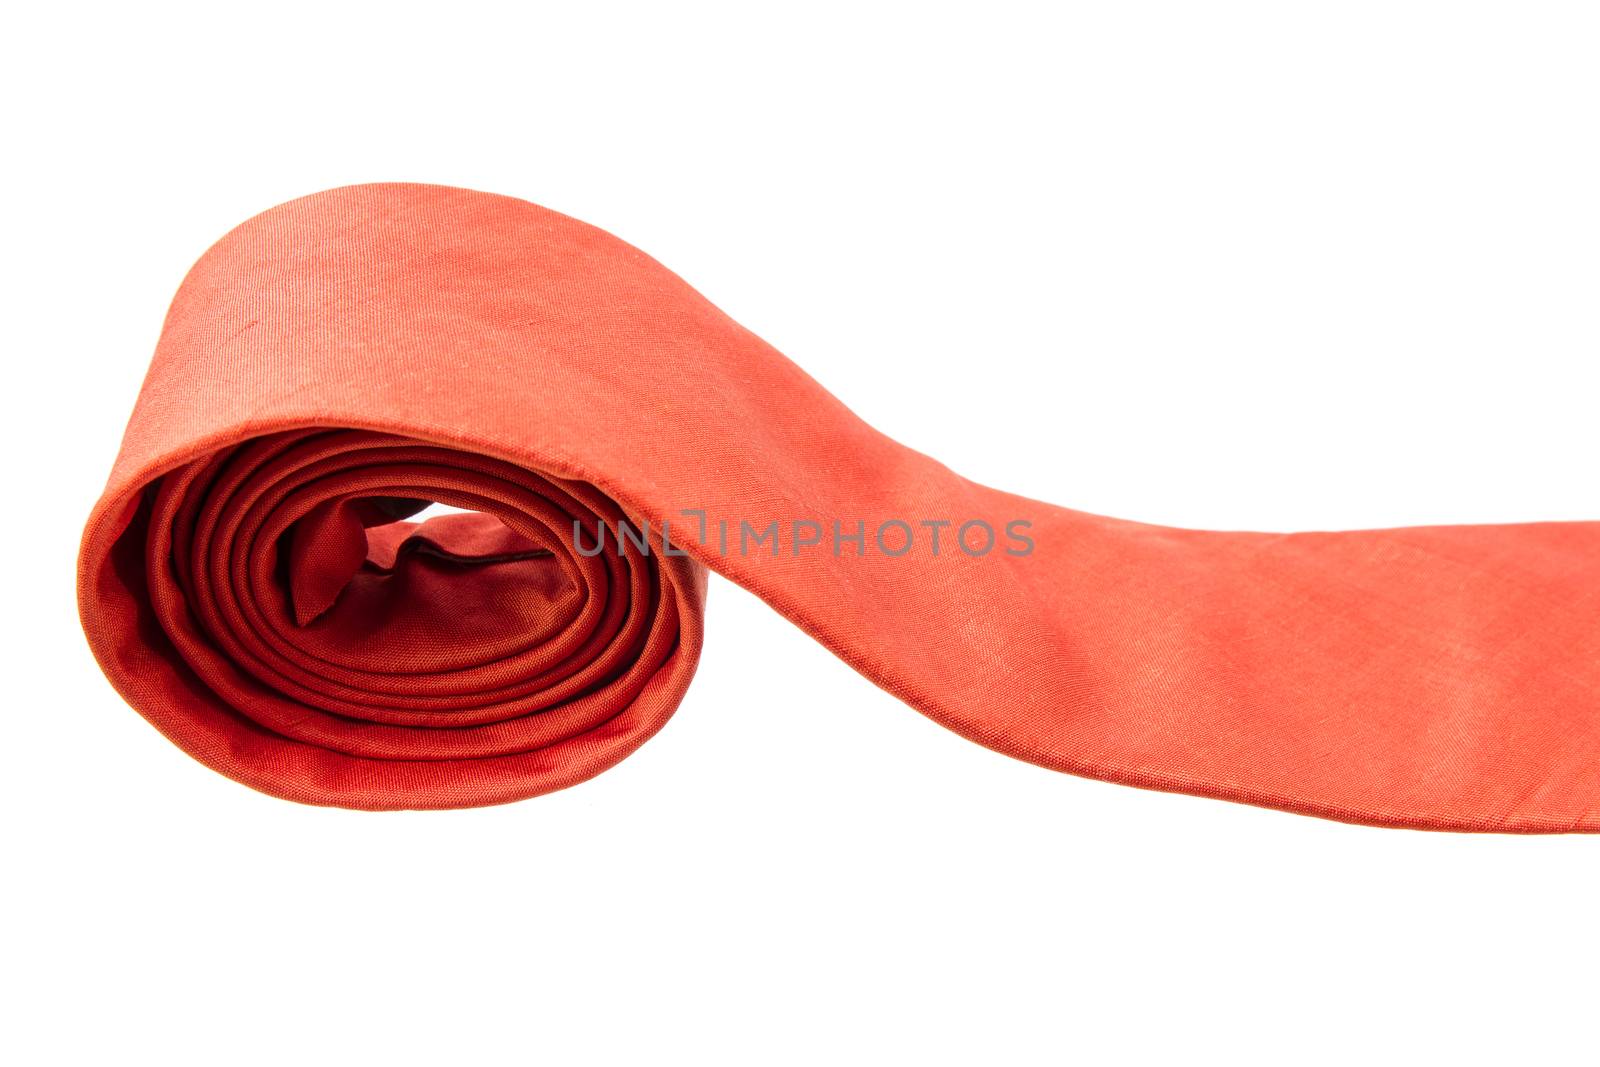 plain orange business neck tie isolated on white background